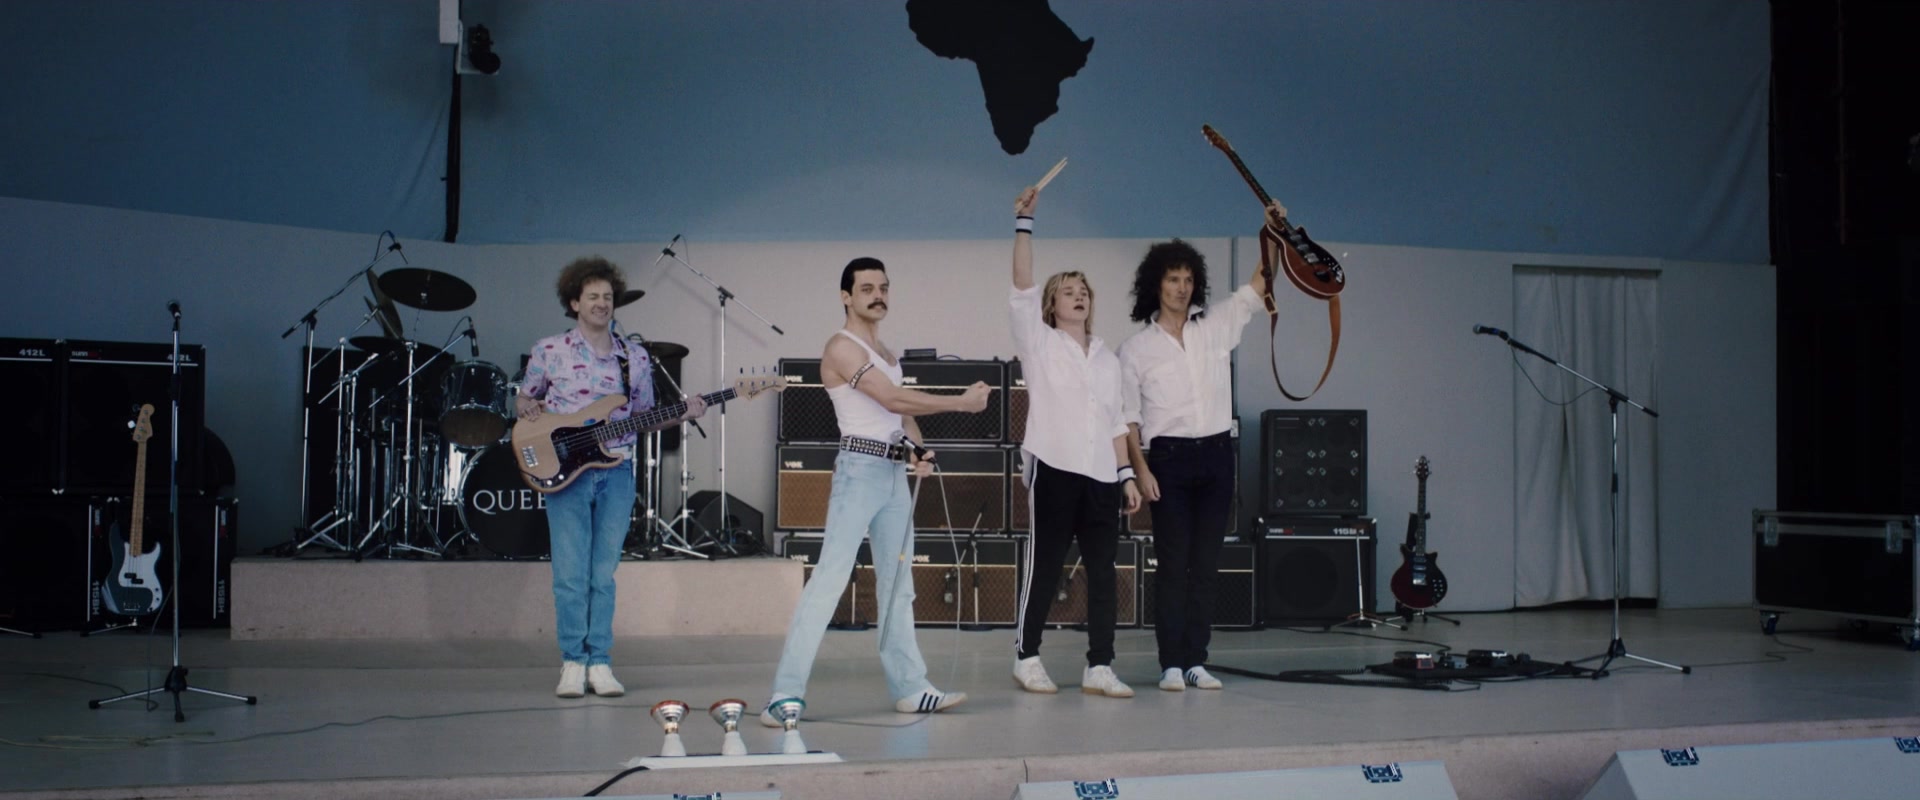 Adidas Shoes (White) Worn by Rami Malek in Bohemian Rhapsody (2018) Movie